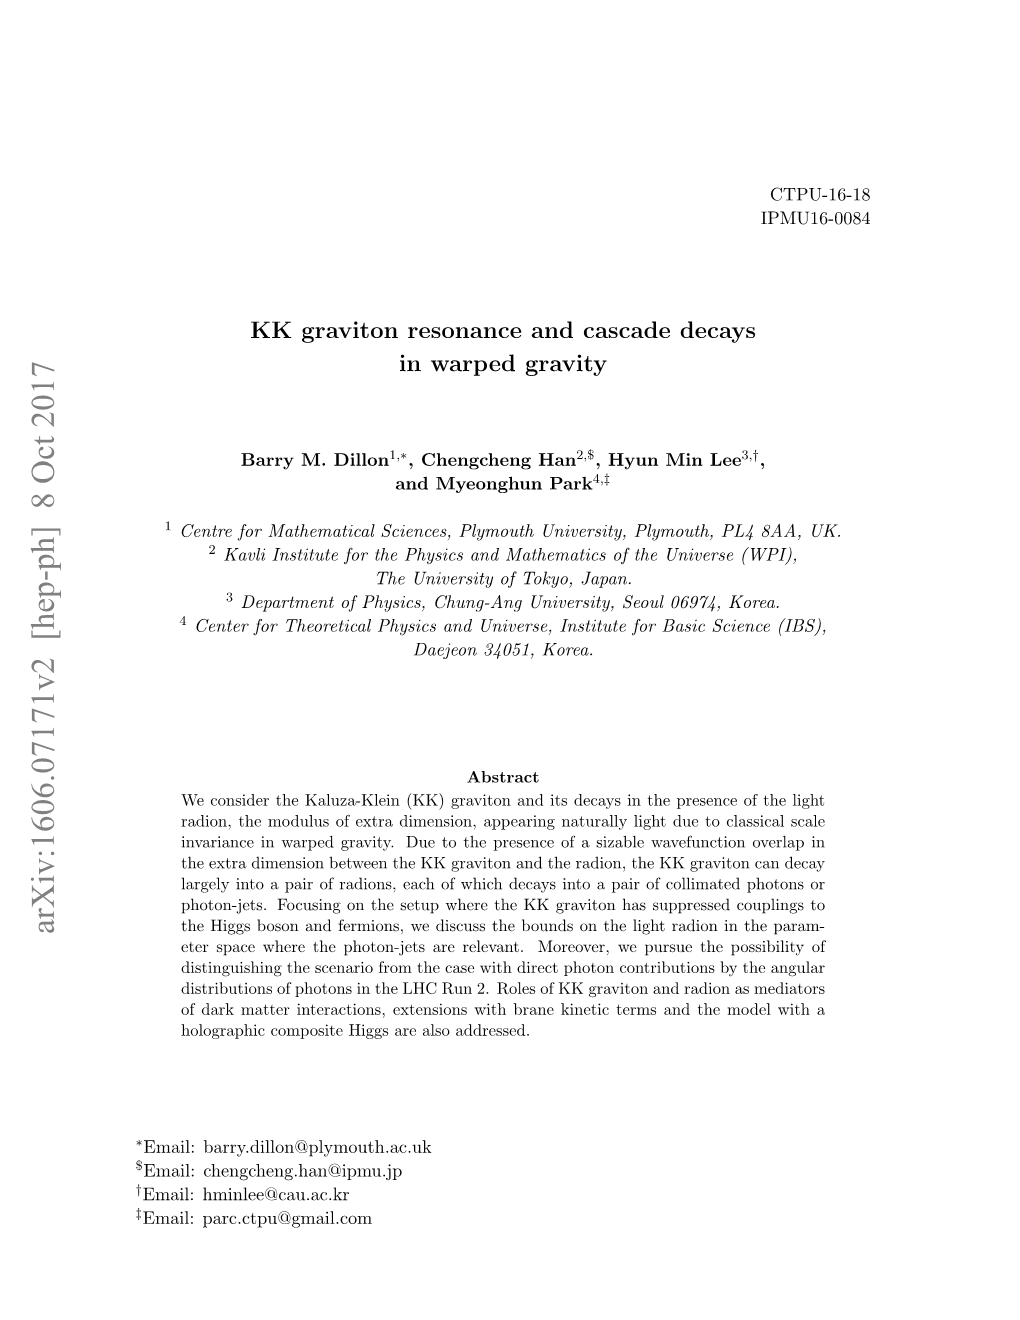 KK Graviton Resonance and Cascade Decays in Warped Gravity